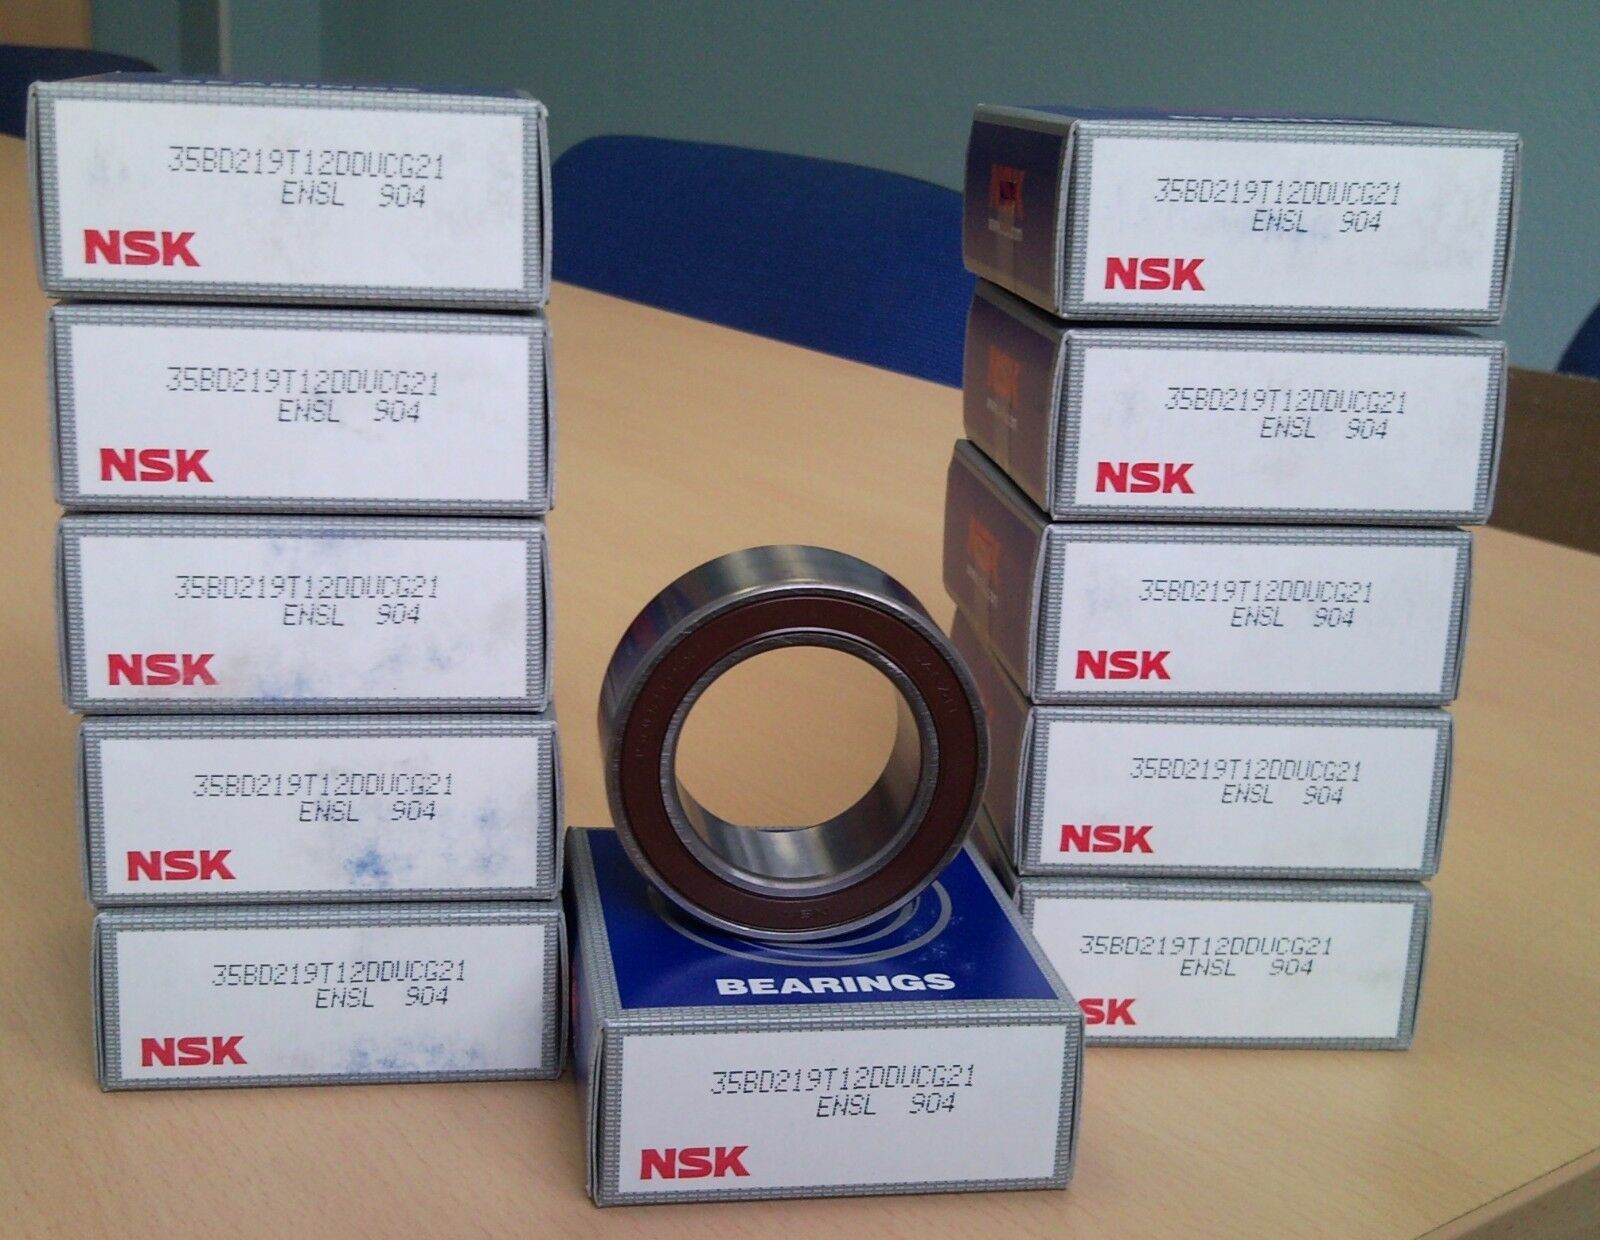 NSK high precision deep groove ball bearings 6208